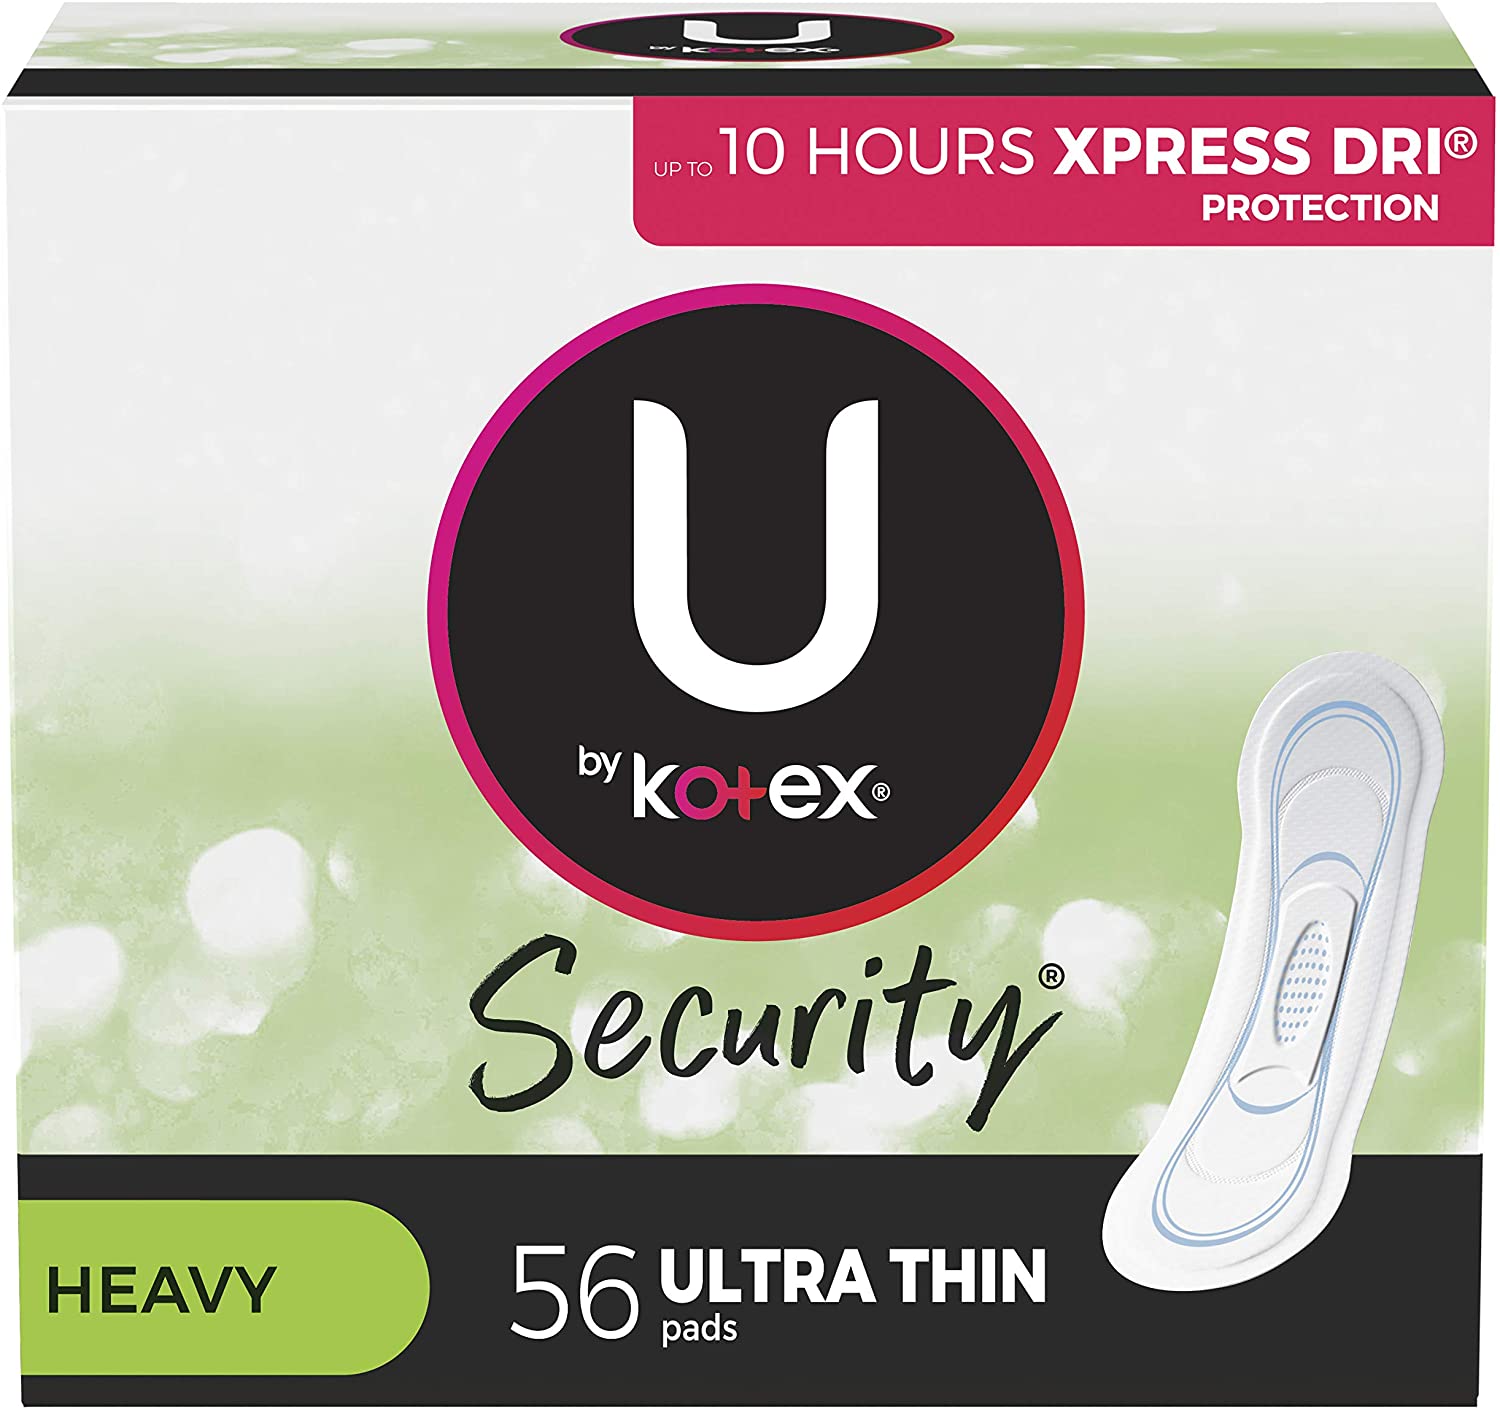 56 ct. Kotex Security Ultra Thin Feminine Pads (Heavy) $5.00 w/s&s